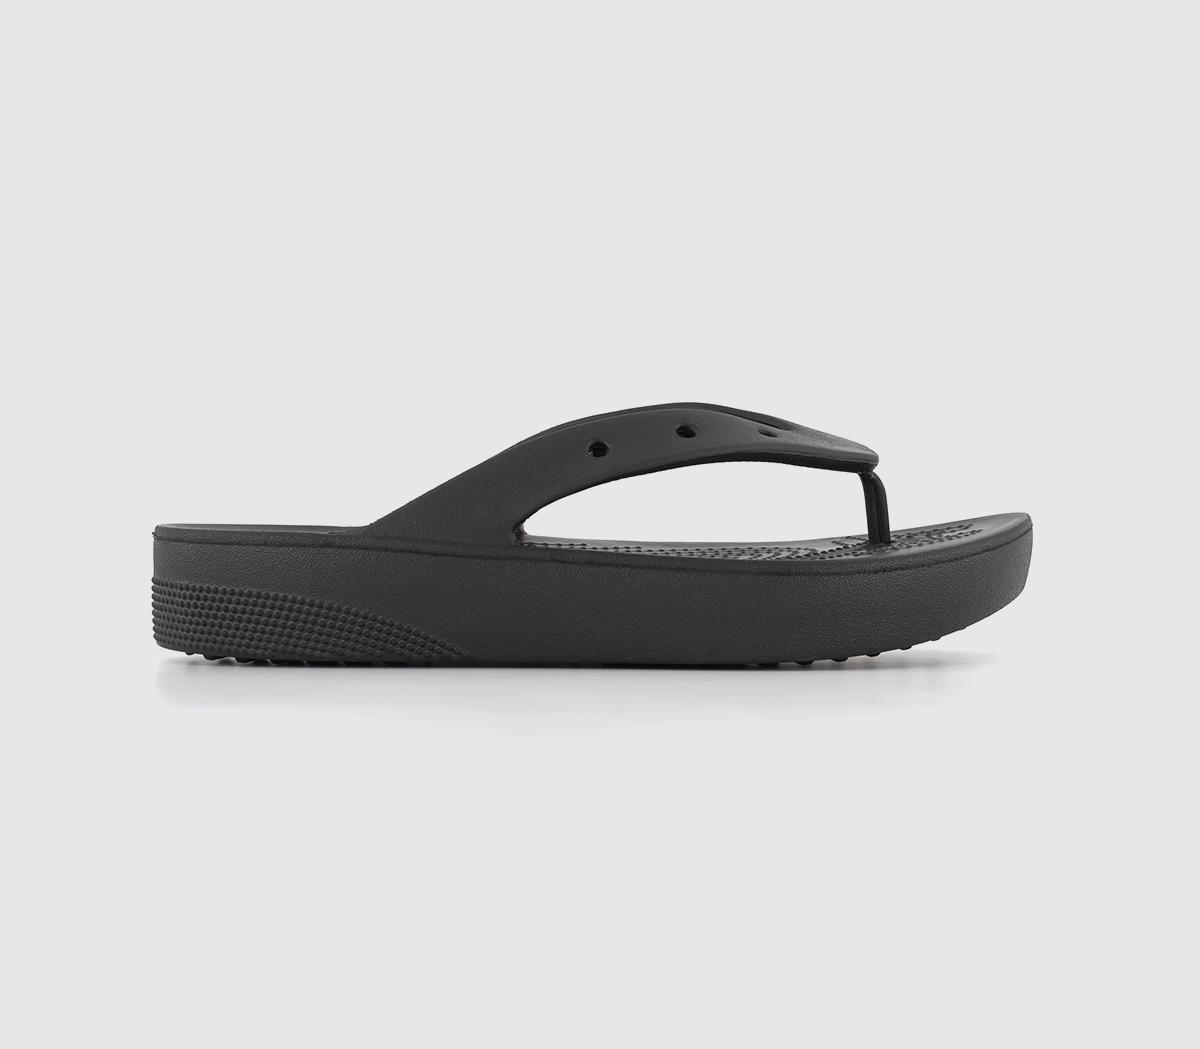 Crocs classic platform flip sandals in black